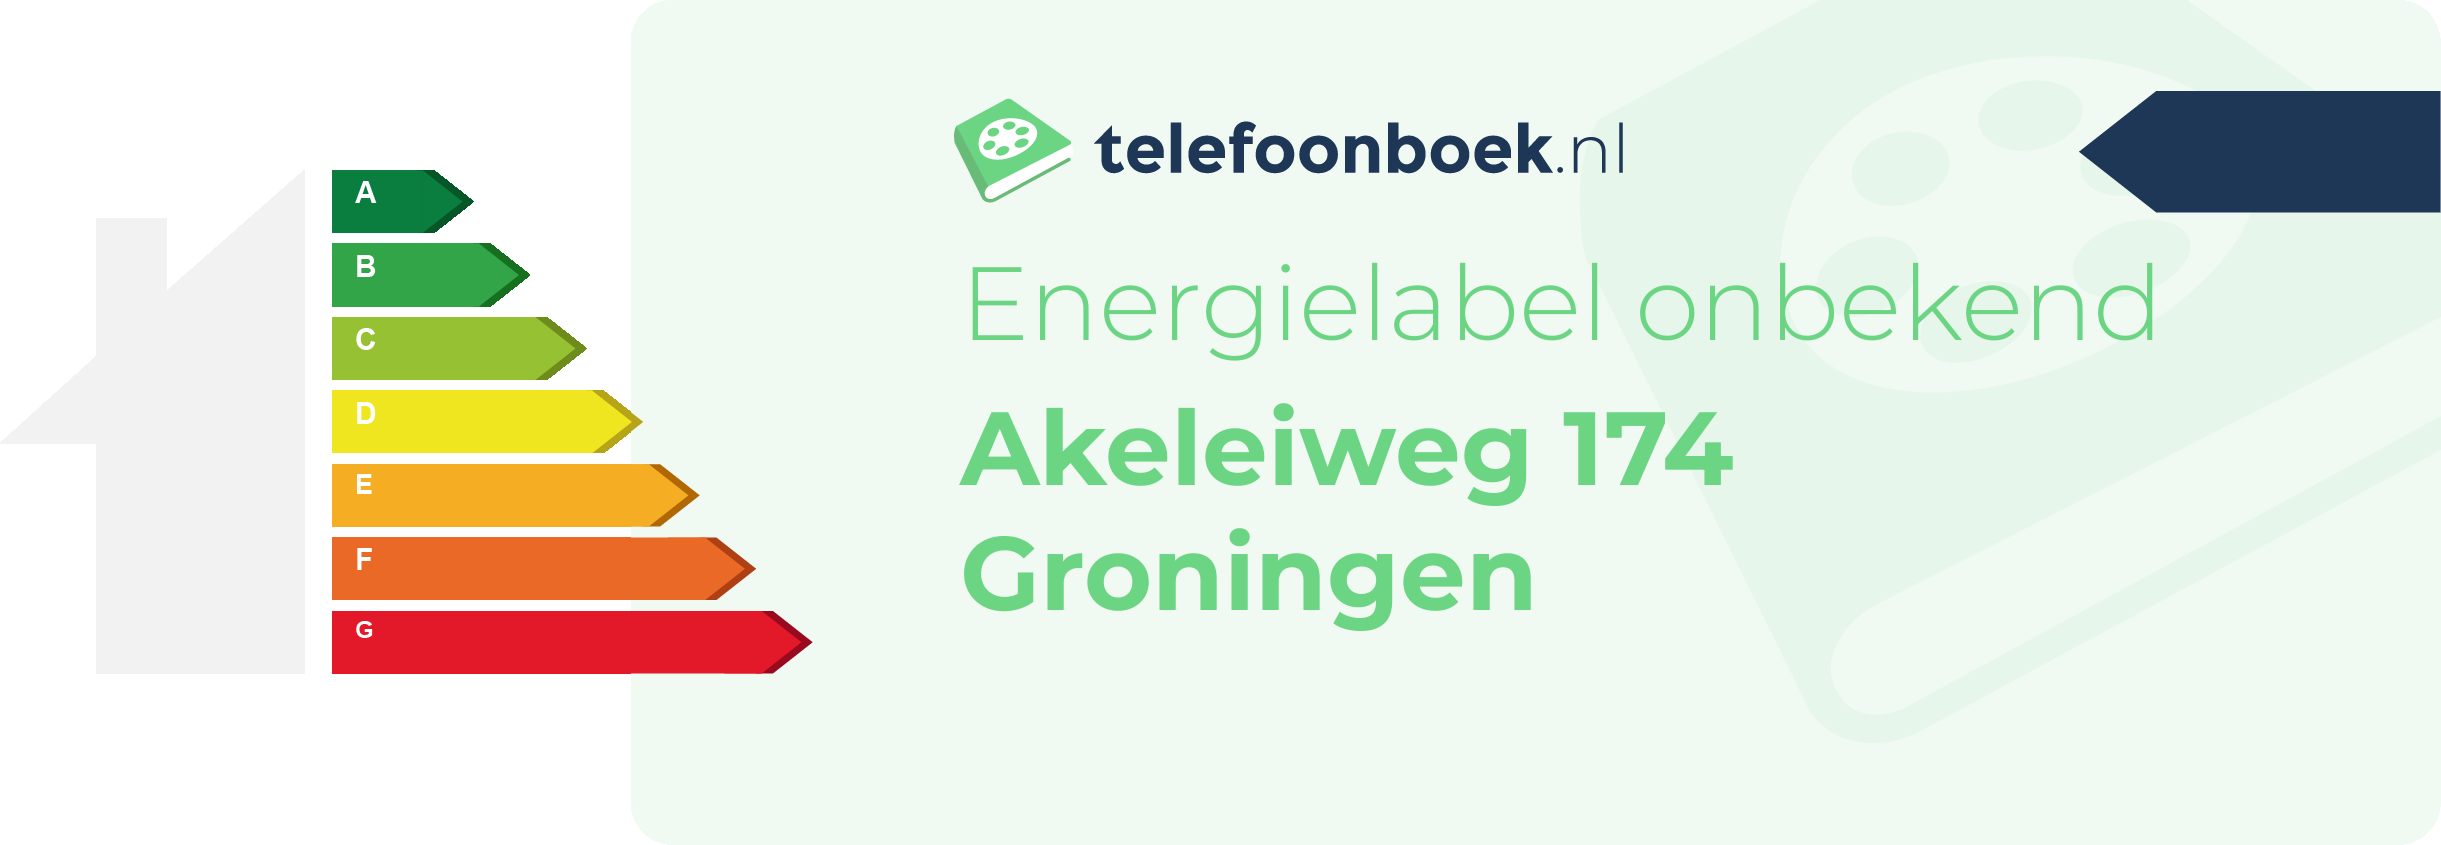 Energielabel Akeleiweg 174 Groningen